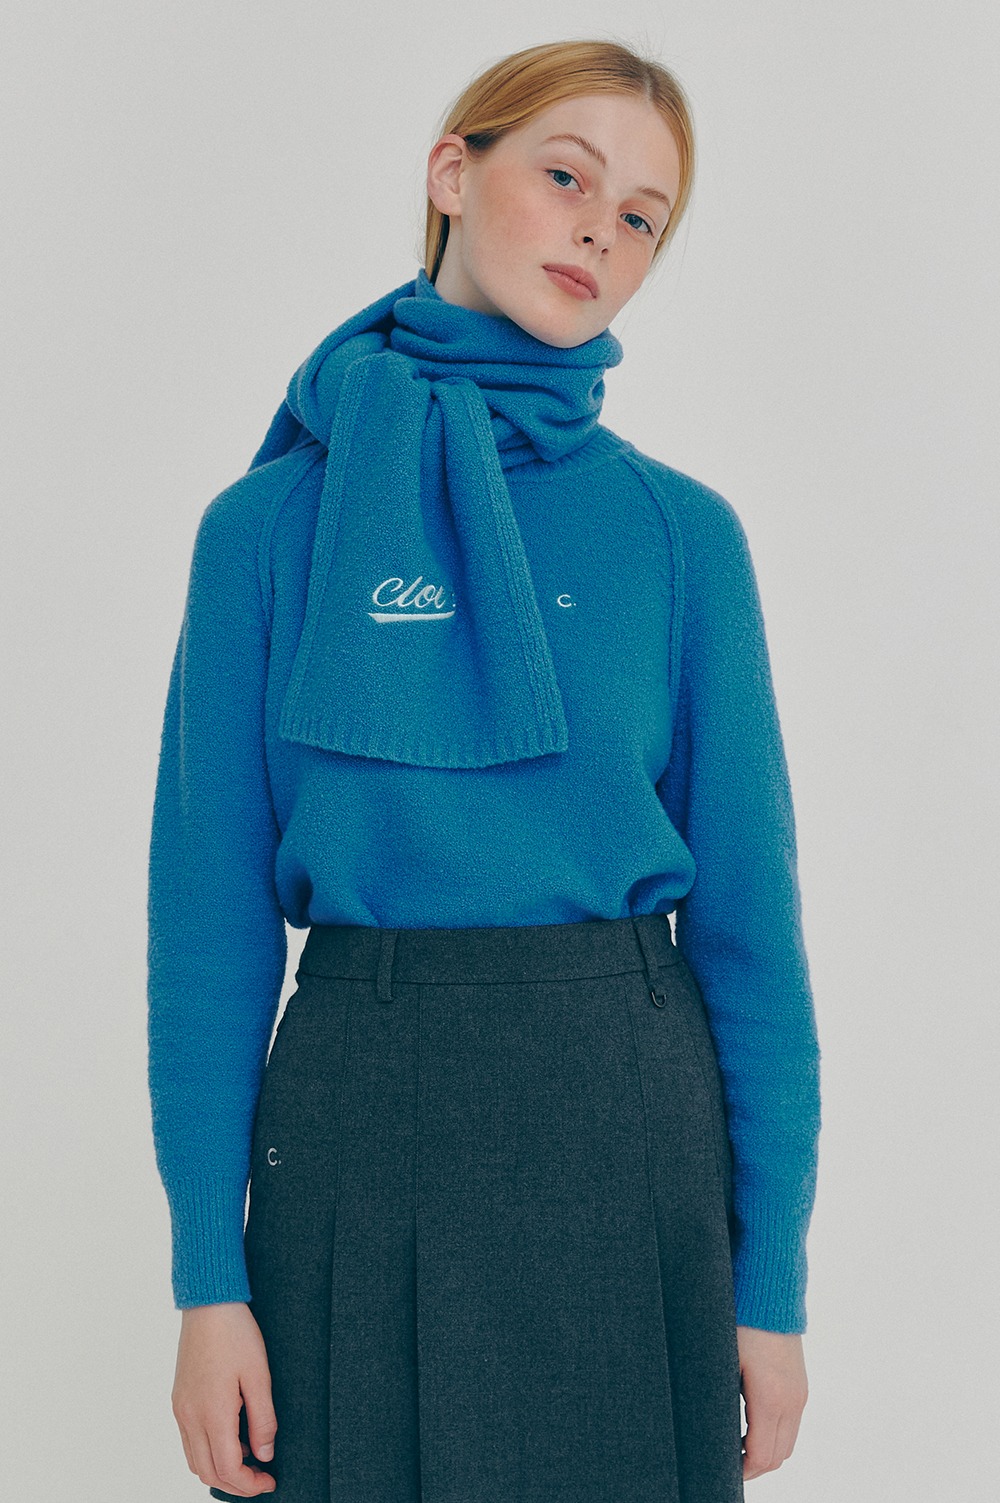 clove - [FW21 clove] Boucle Pullover Knit (Blue)